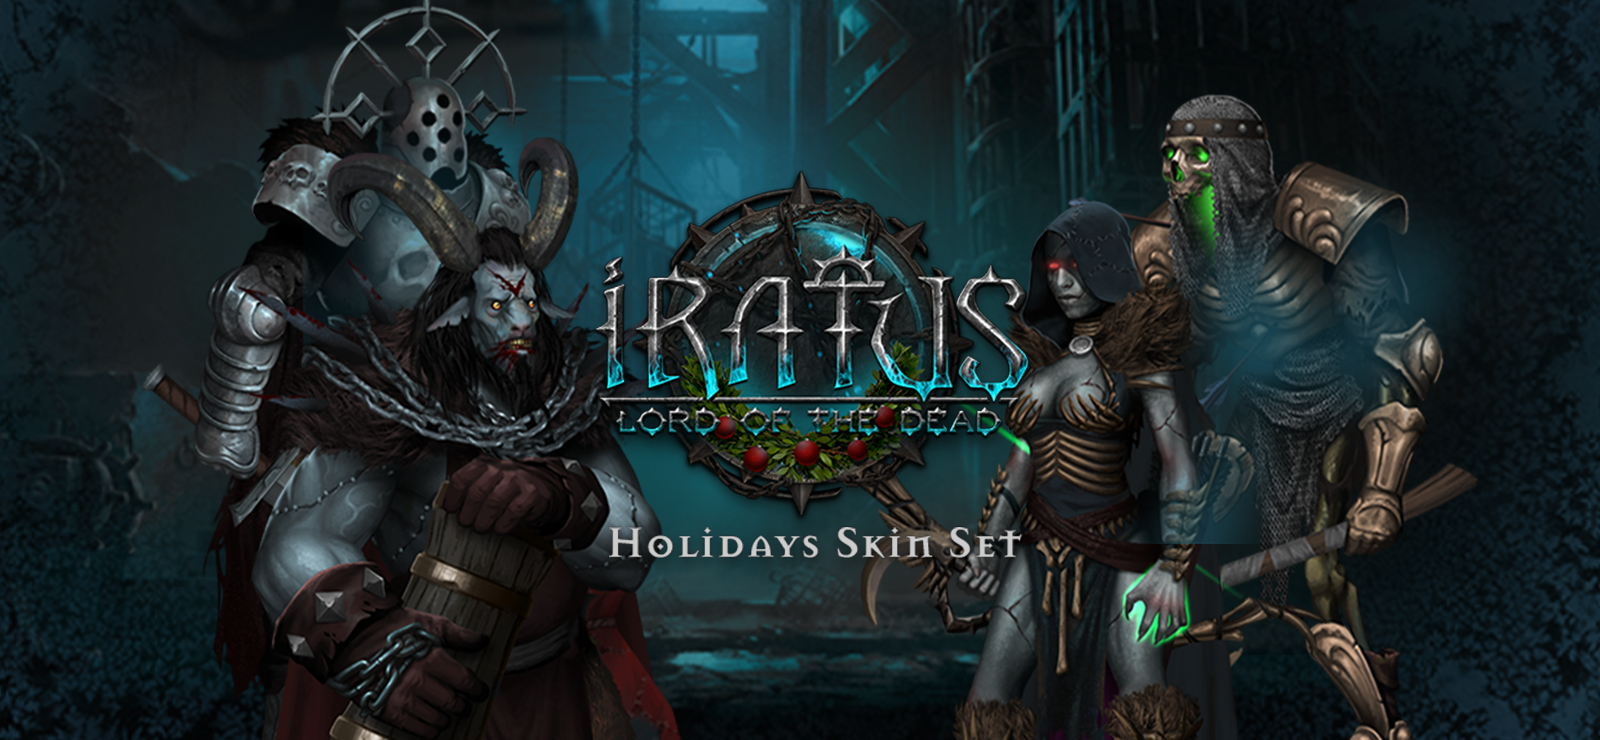 Iratus: Holidays Skin Set